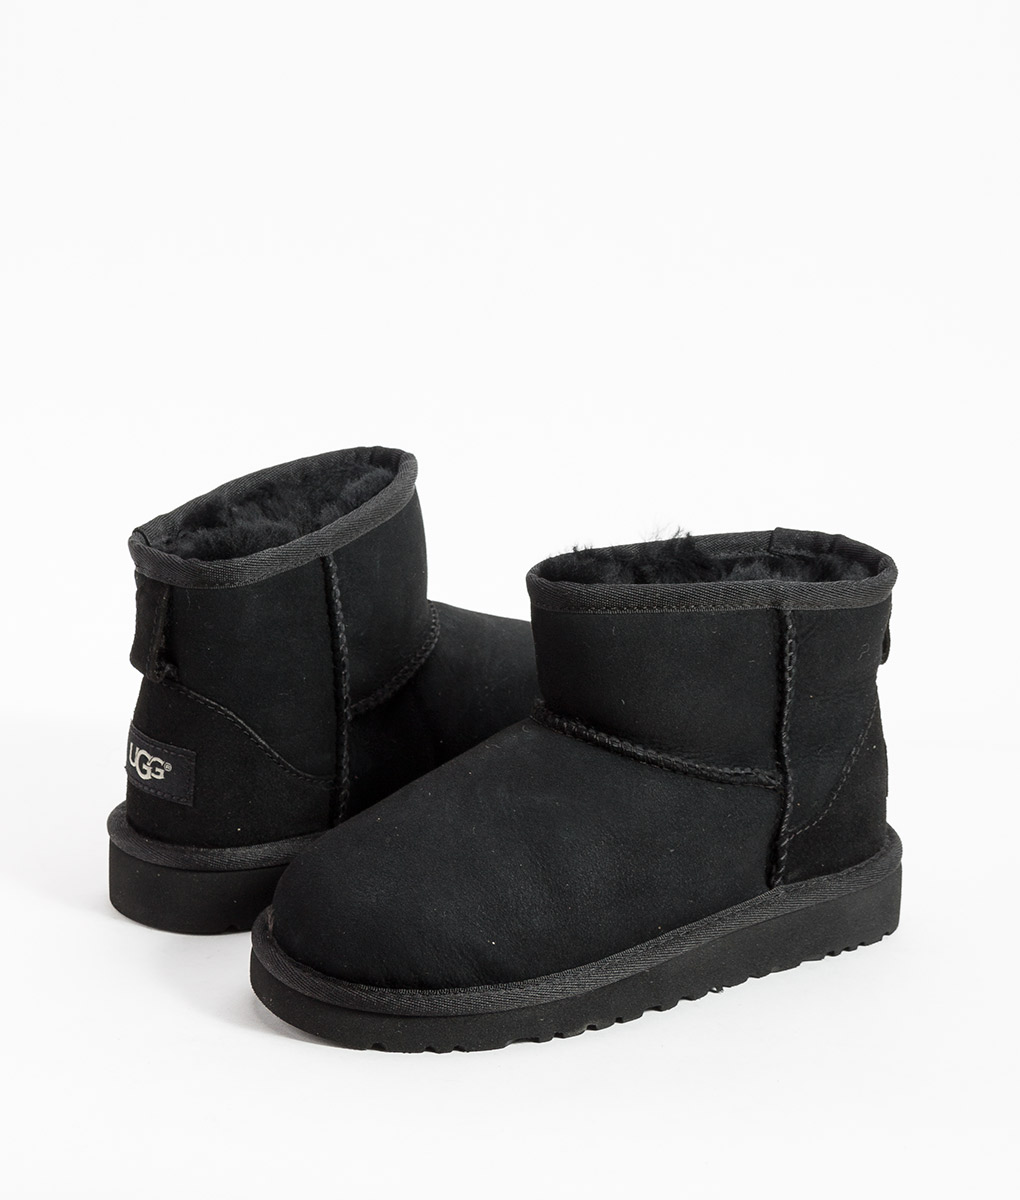 UGG Kids Ankle Boots CLASSIC MINI, Black 194.99 1